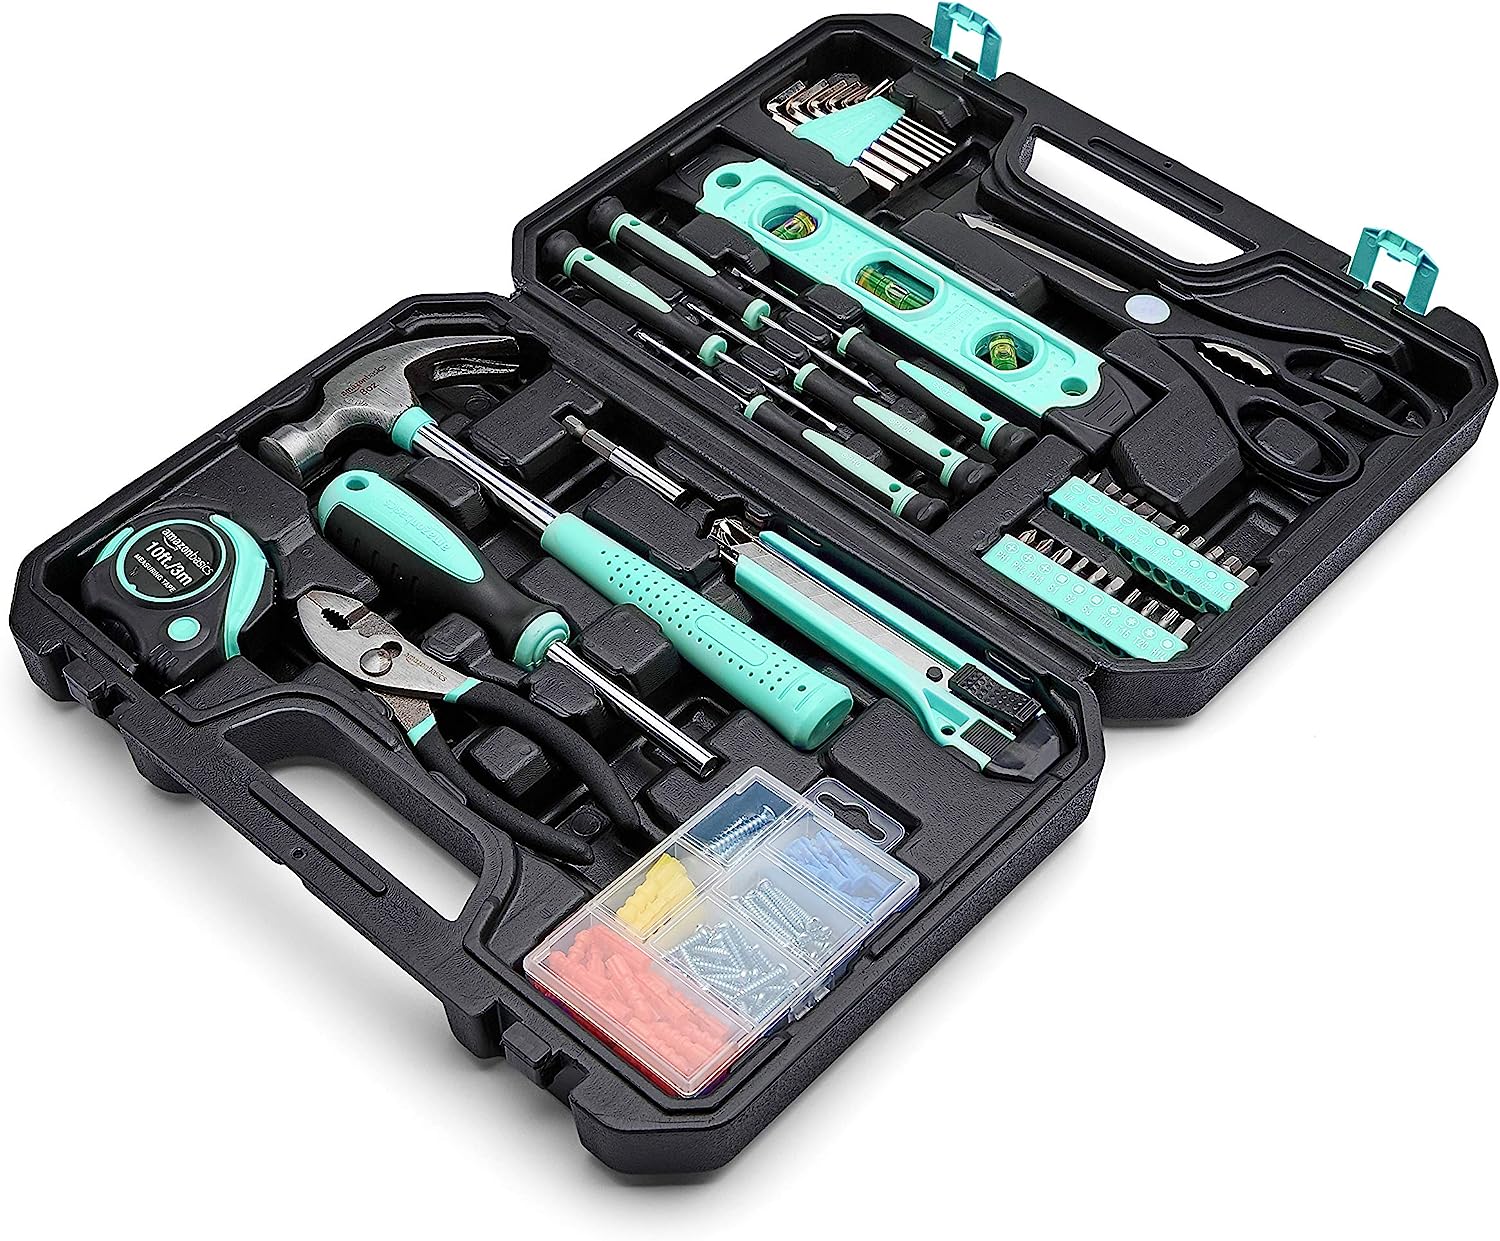 Amazon Basics Household Tool Kit With Storage Case Review